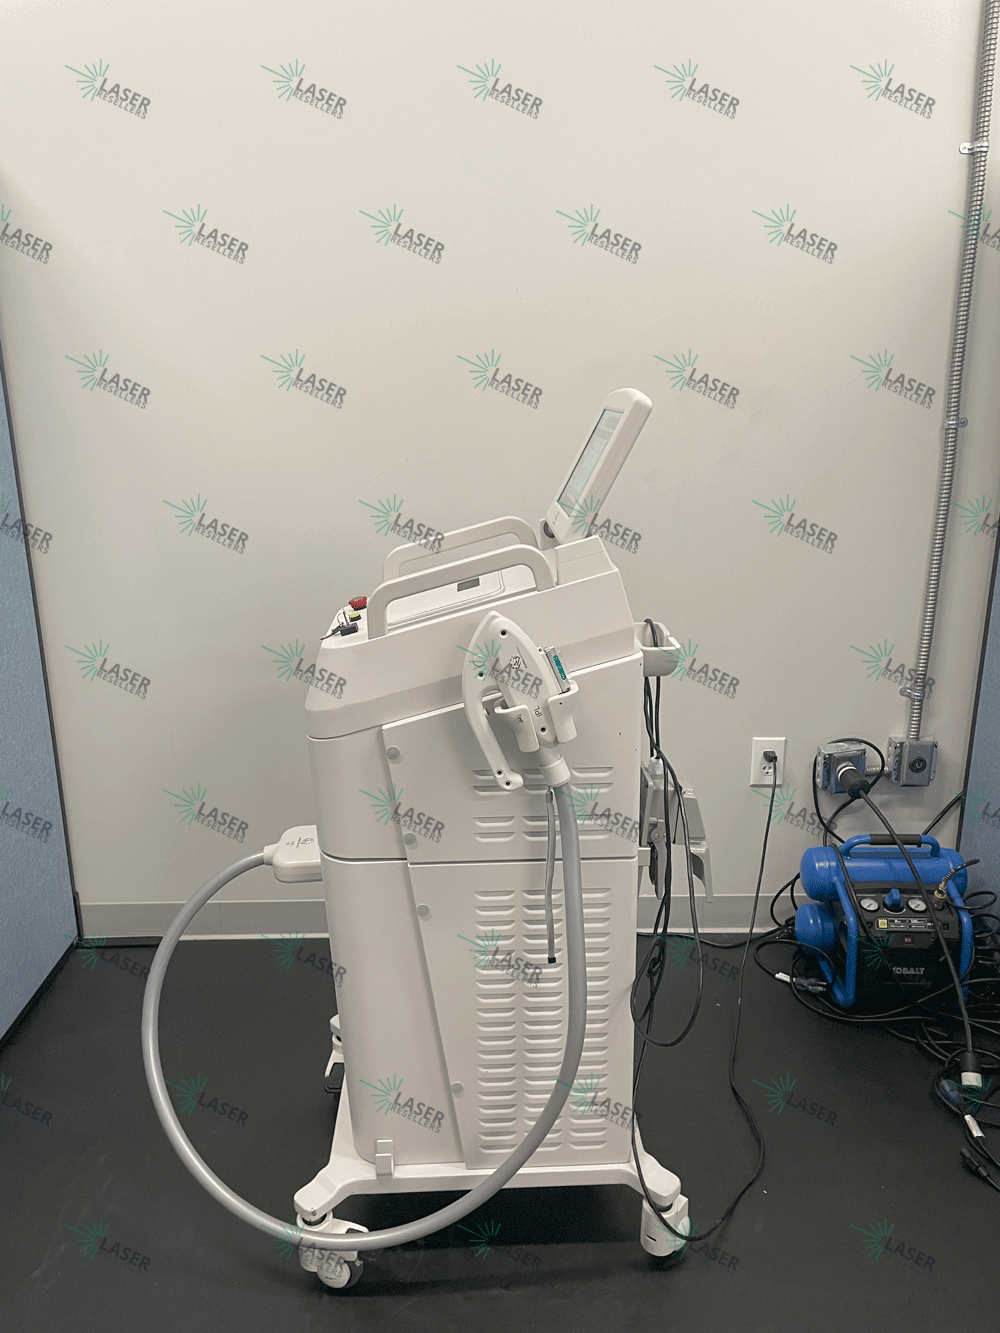 Rohrer Aesthetics Spectrum Multi-Platform Laser System - Metro Dental  Medical Center